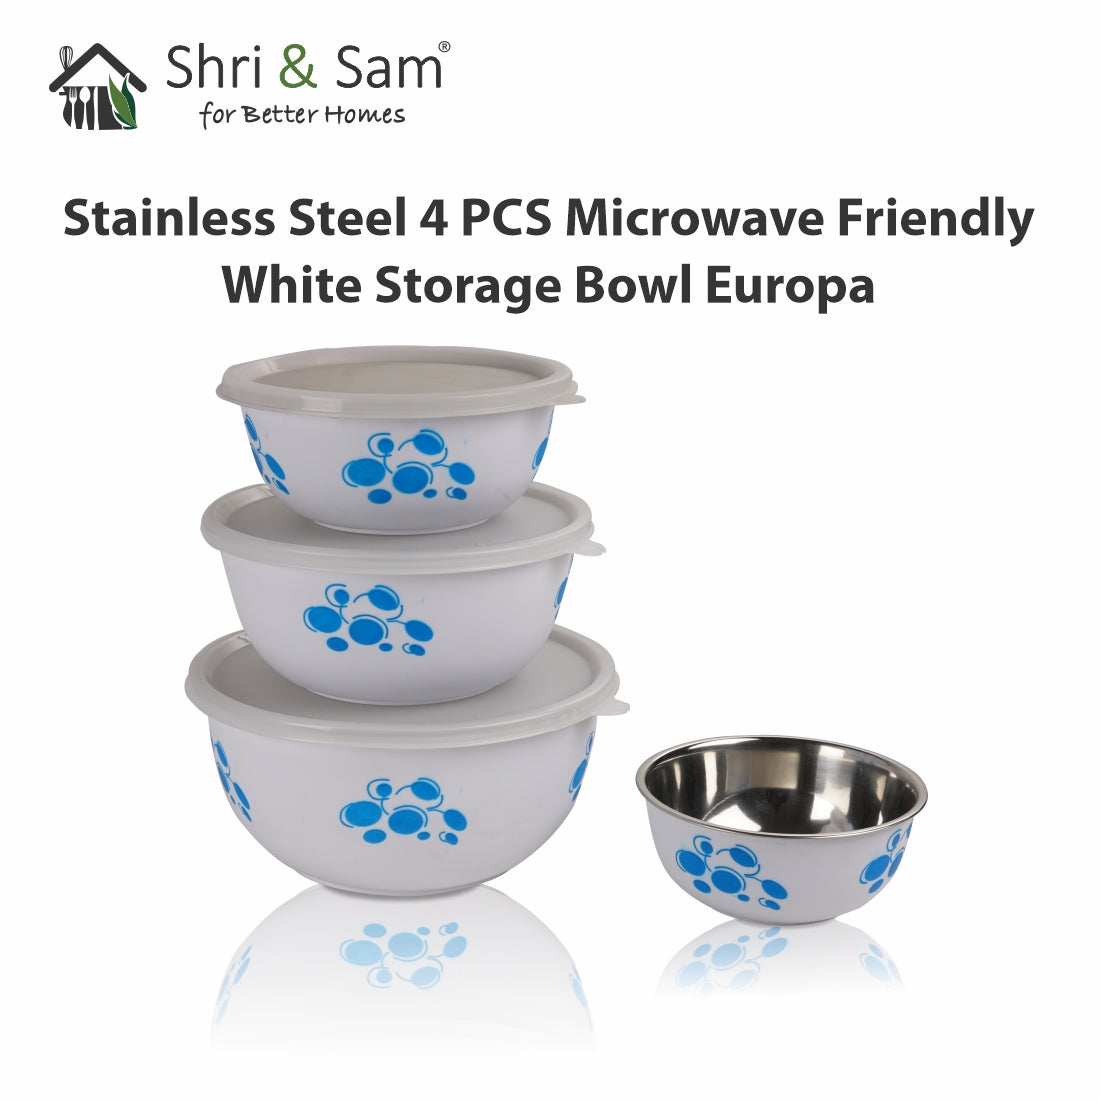 Stainless Steel 4 PCS Microwave Friendly White Storage Bowl Europa